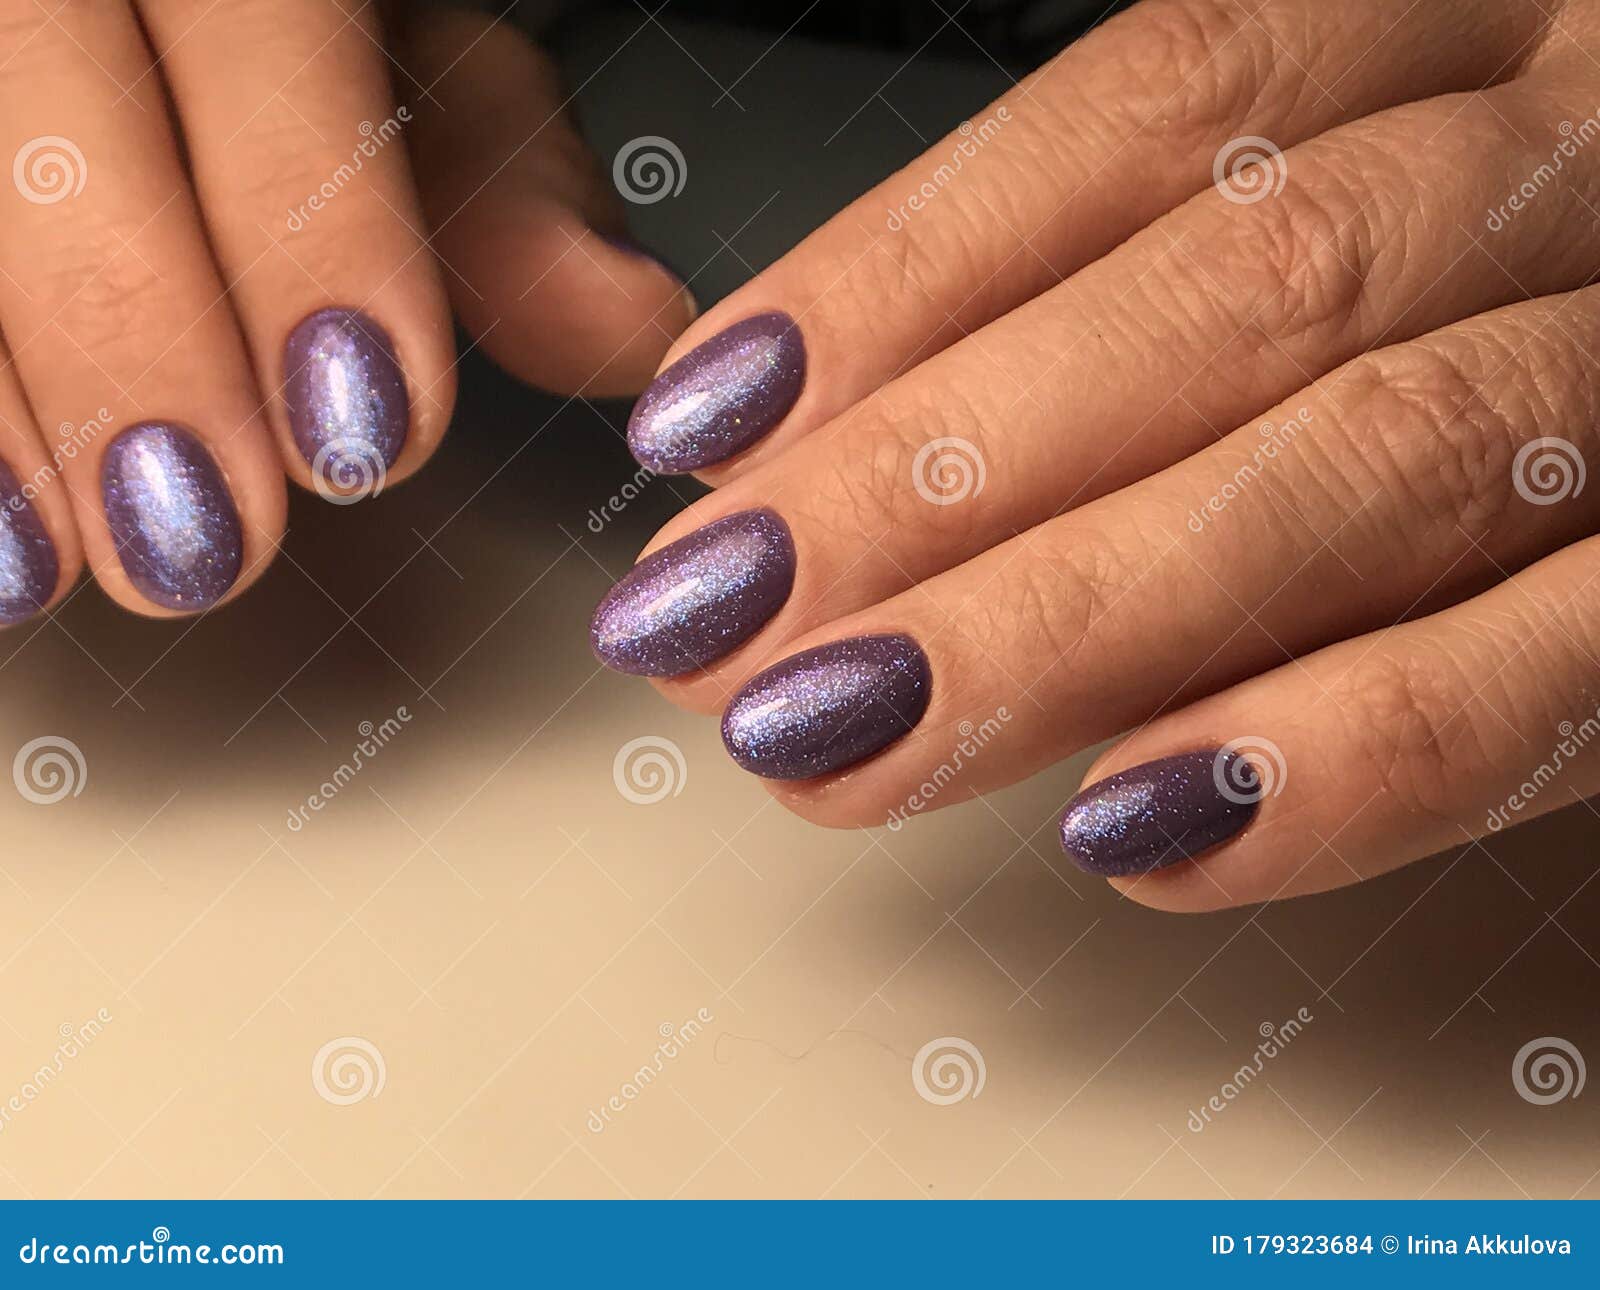 Glamorous Nail Design with Glitter Stock Photo - Image of finger ...